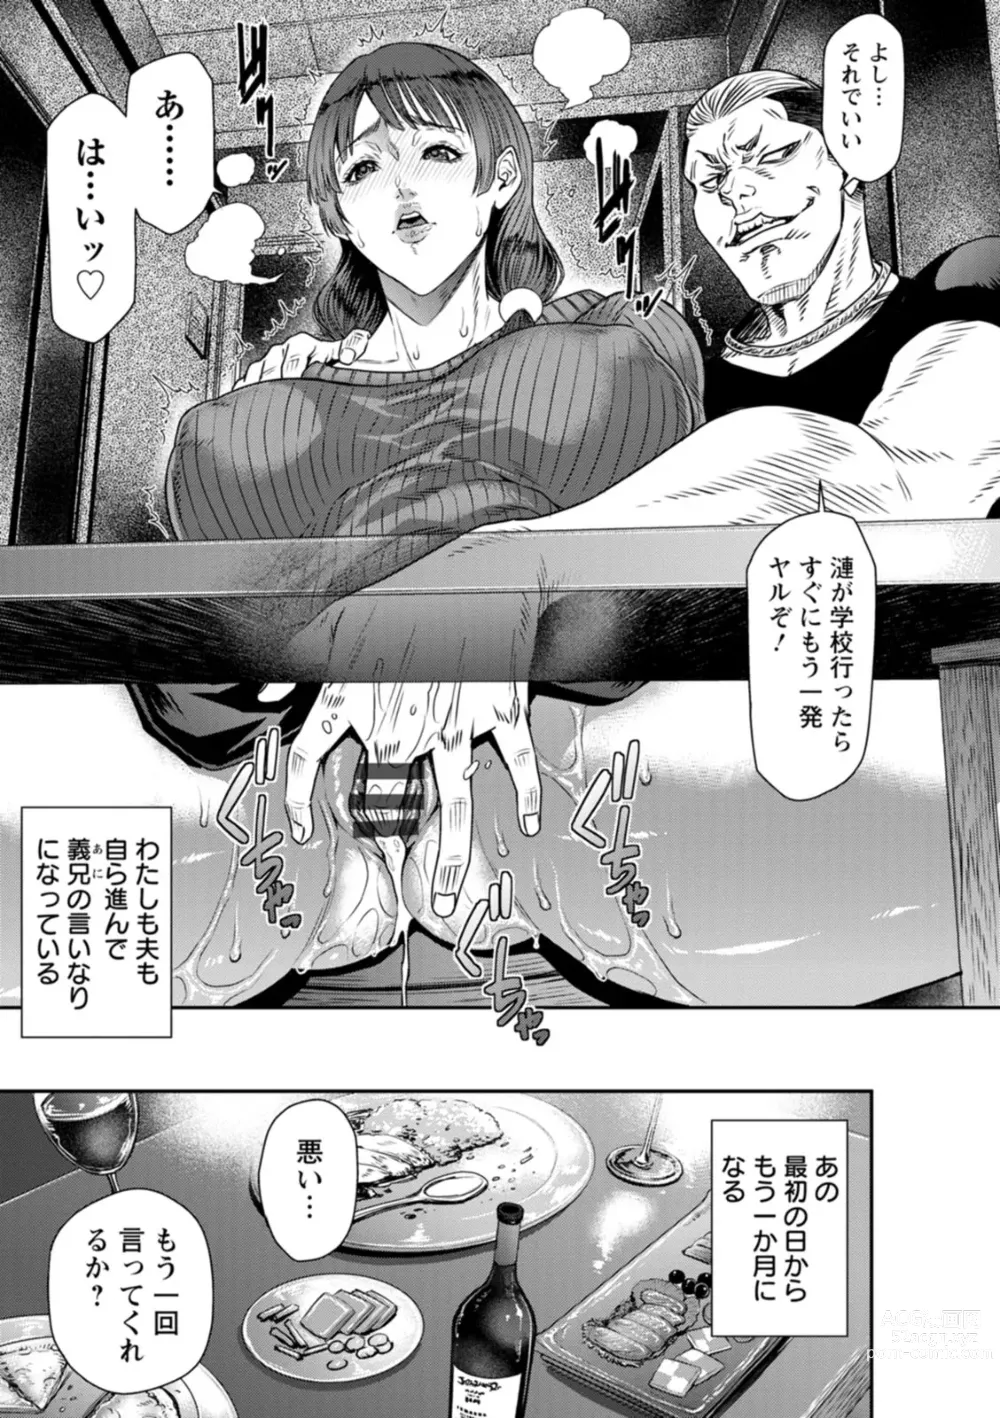 Page 165 of manga Obscene Box